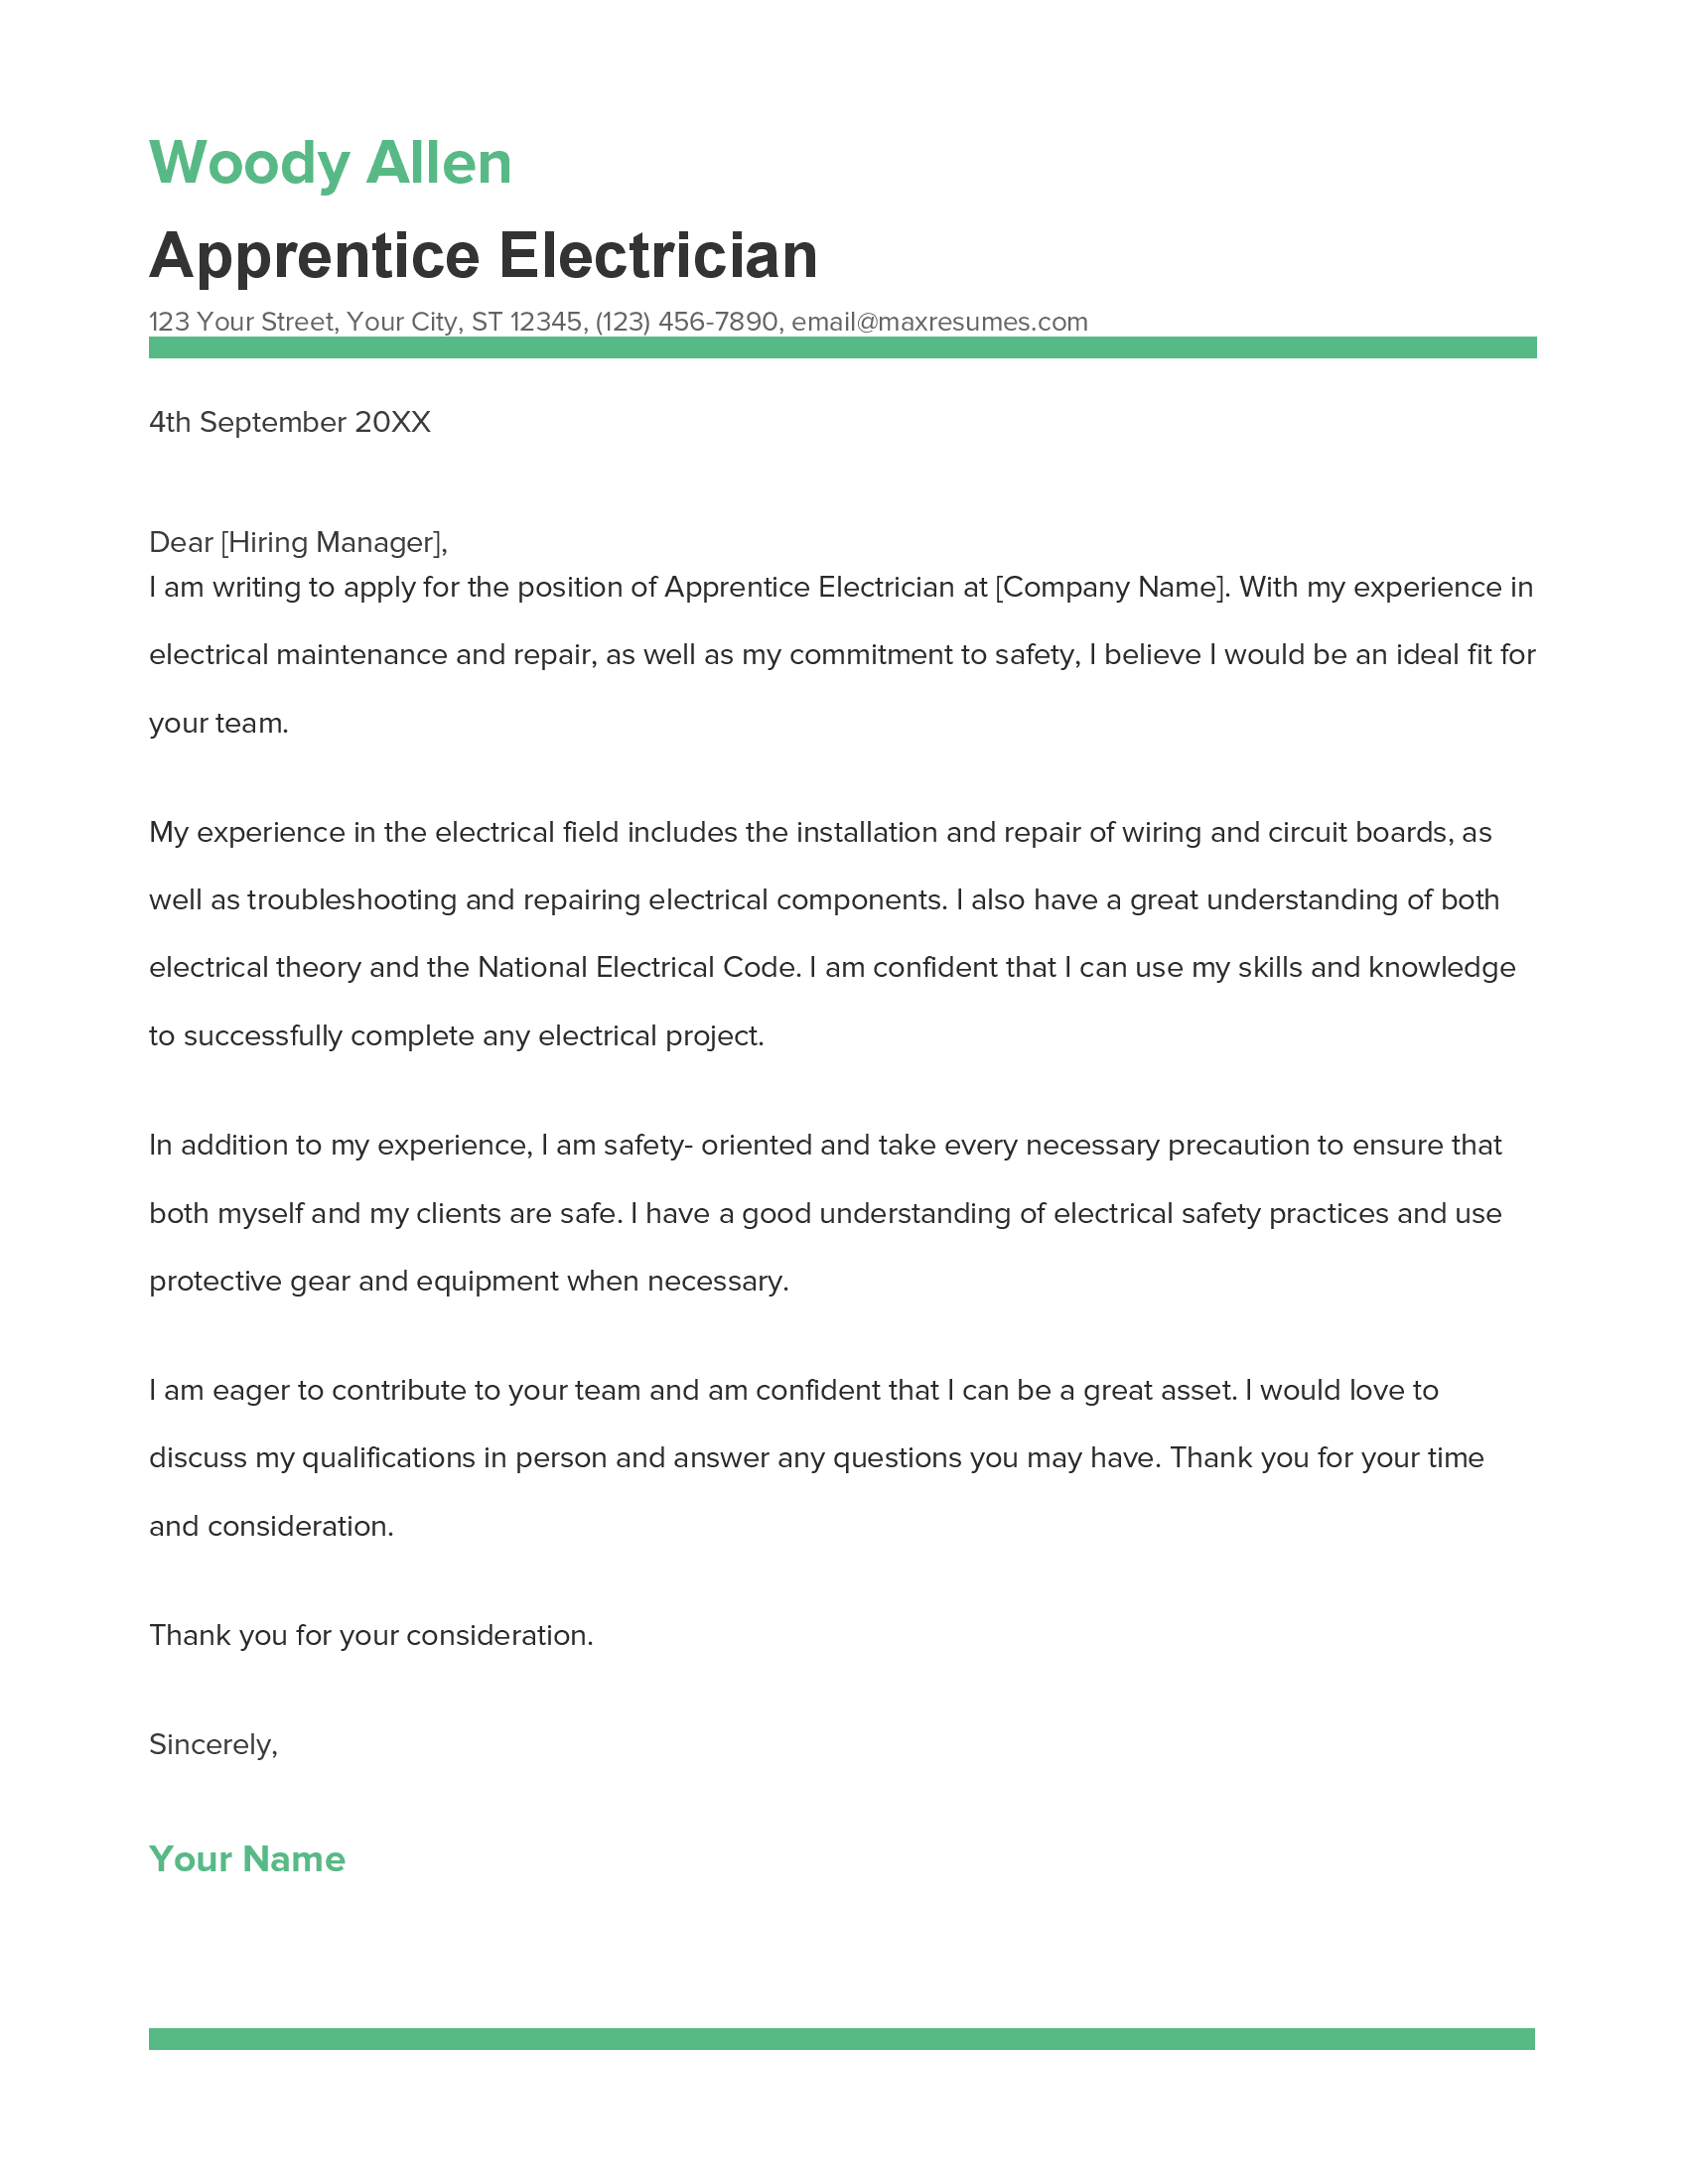 application letter for apprentice